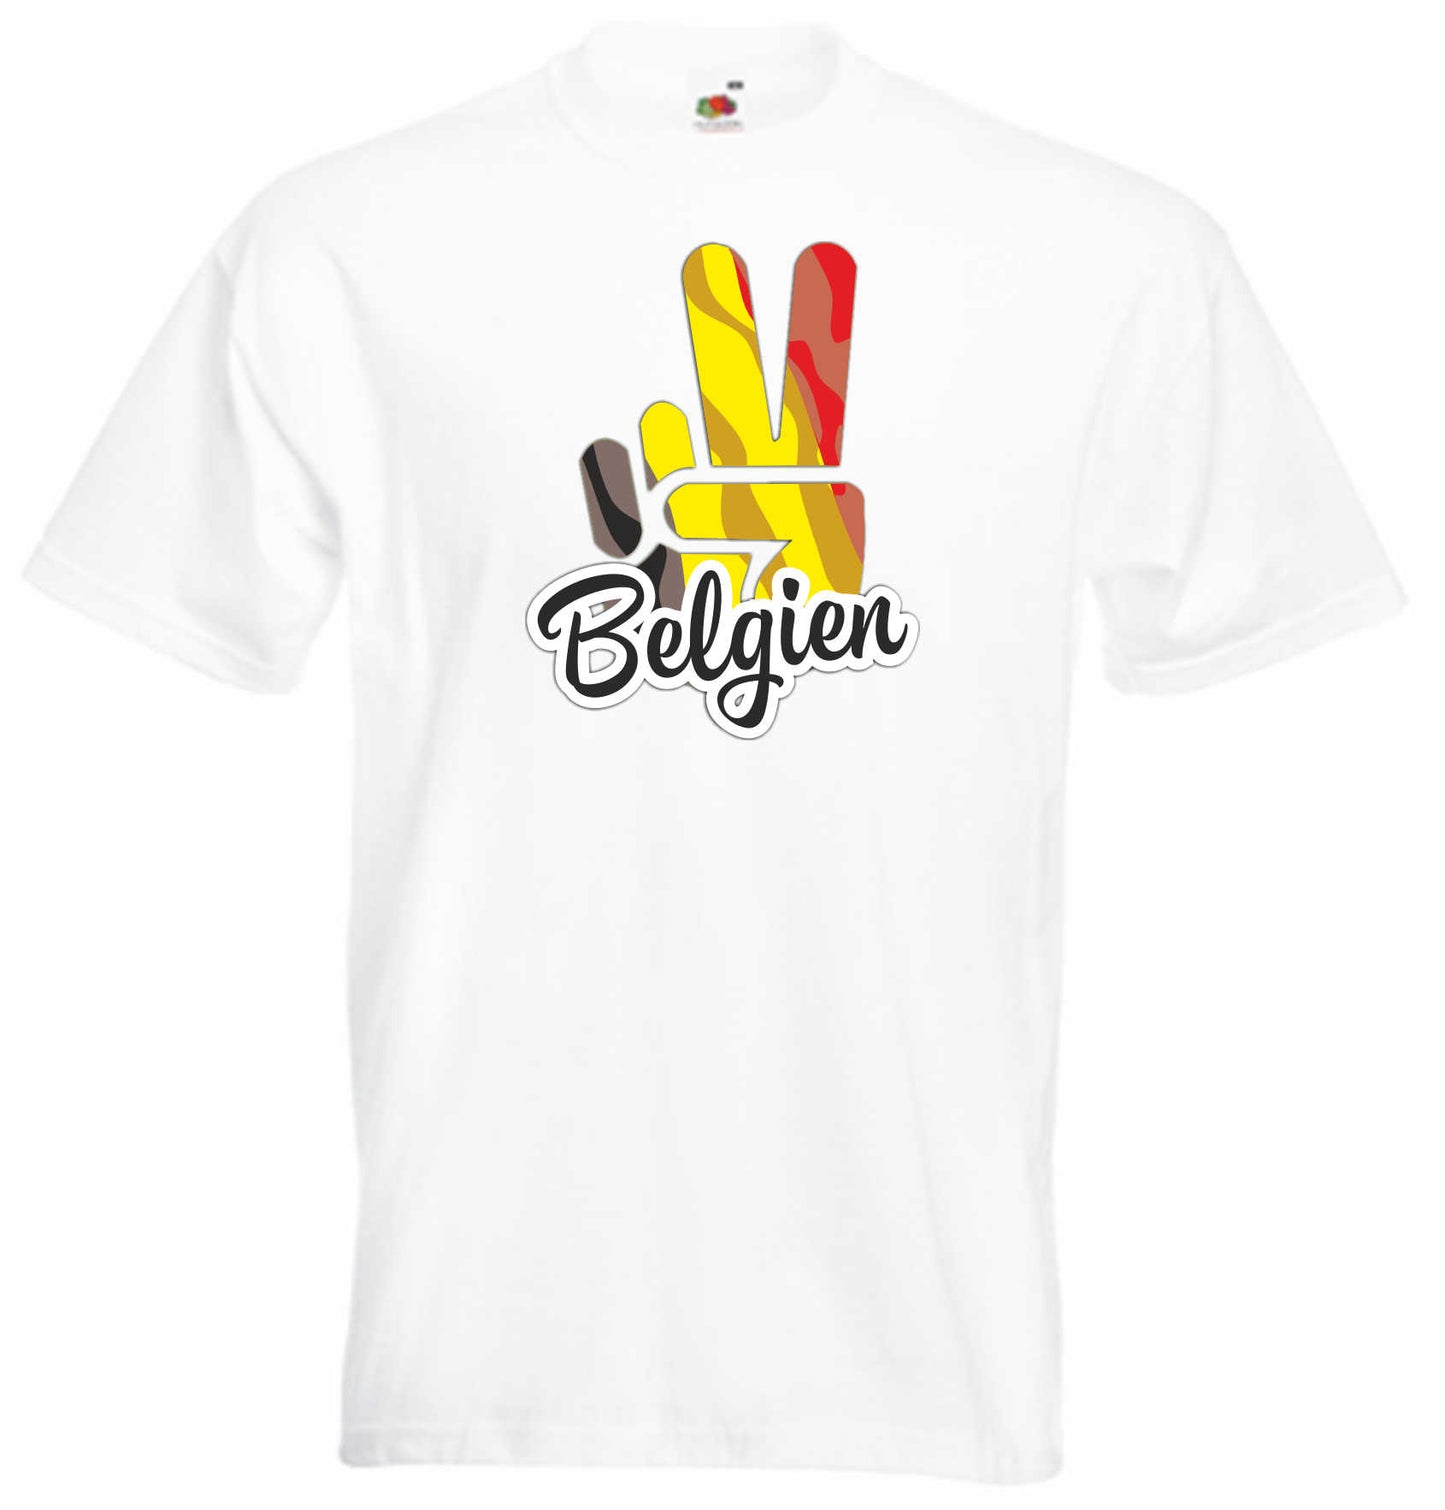 T-Shirt Herren - Victory - Flagge / Fahne - Belgien - Sieg